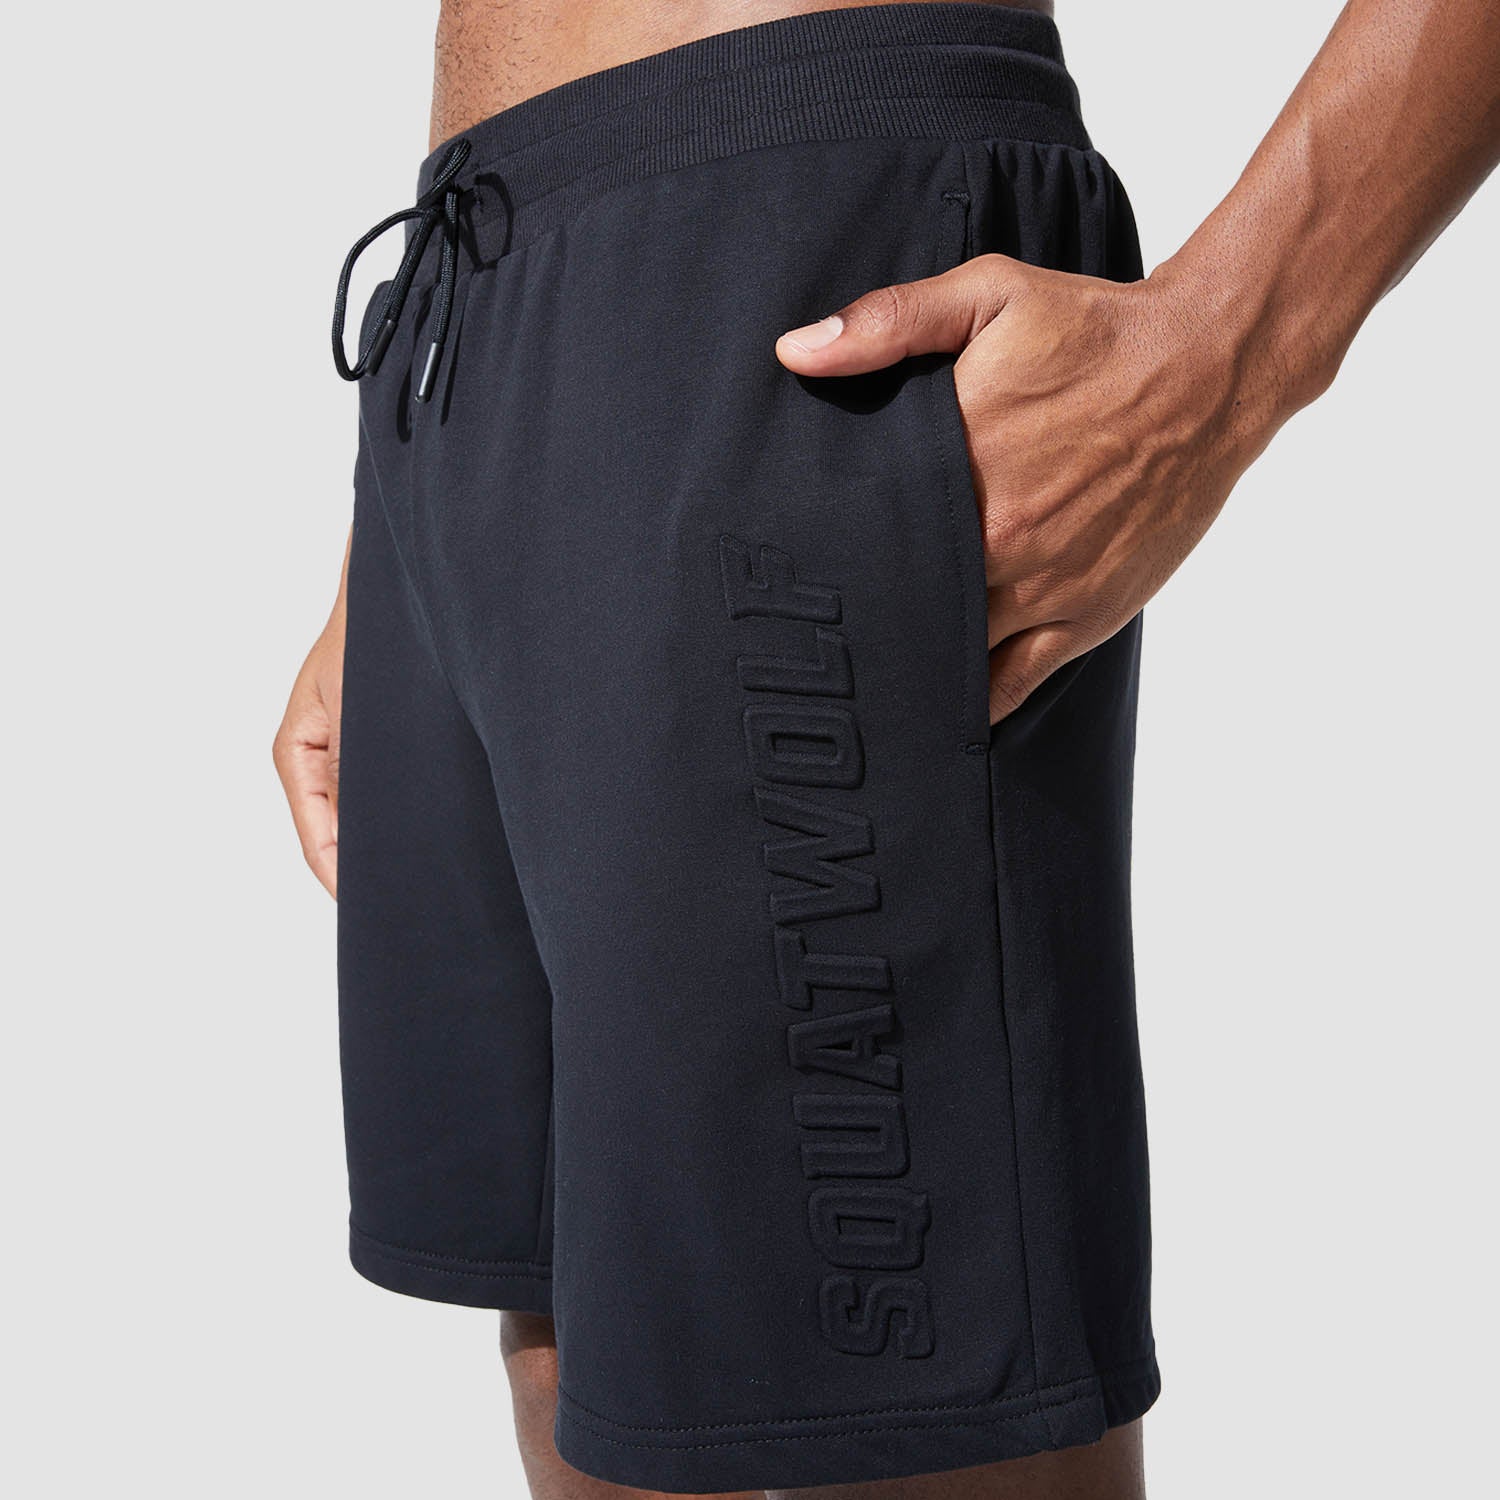 squatwolf-gym-wear-graphic-wordmark-jogger-shorts-black-workout-shorts-for-men